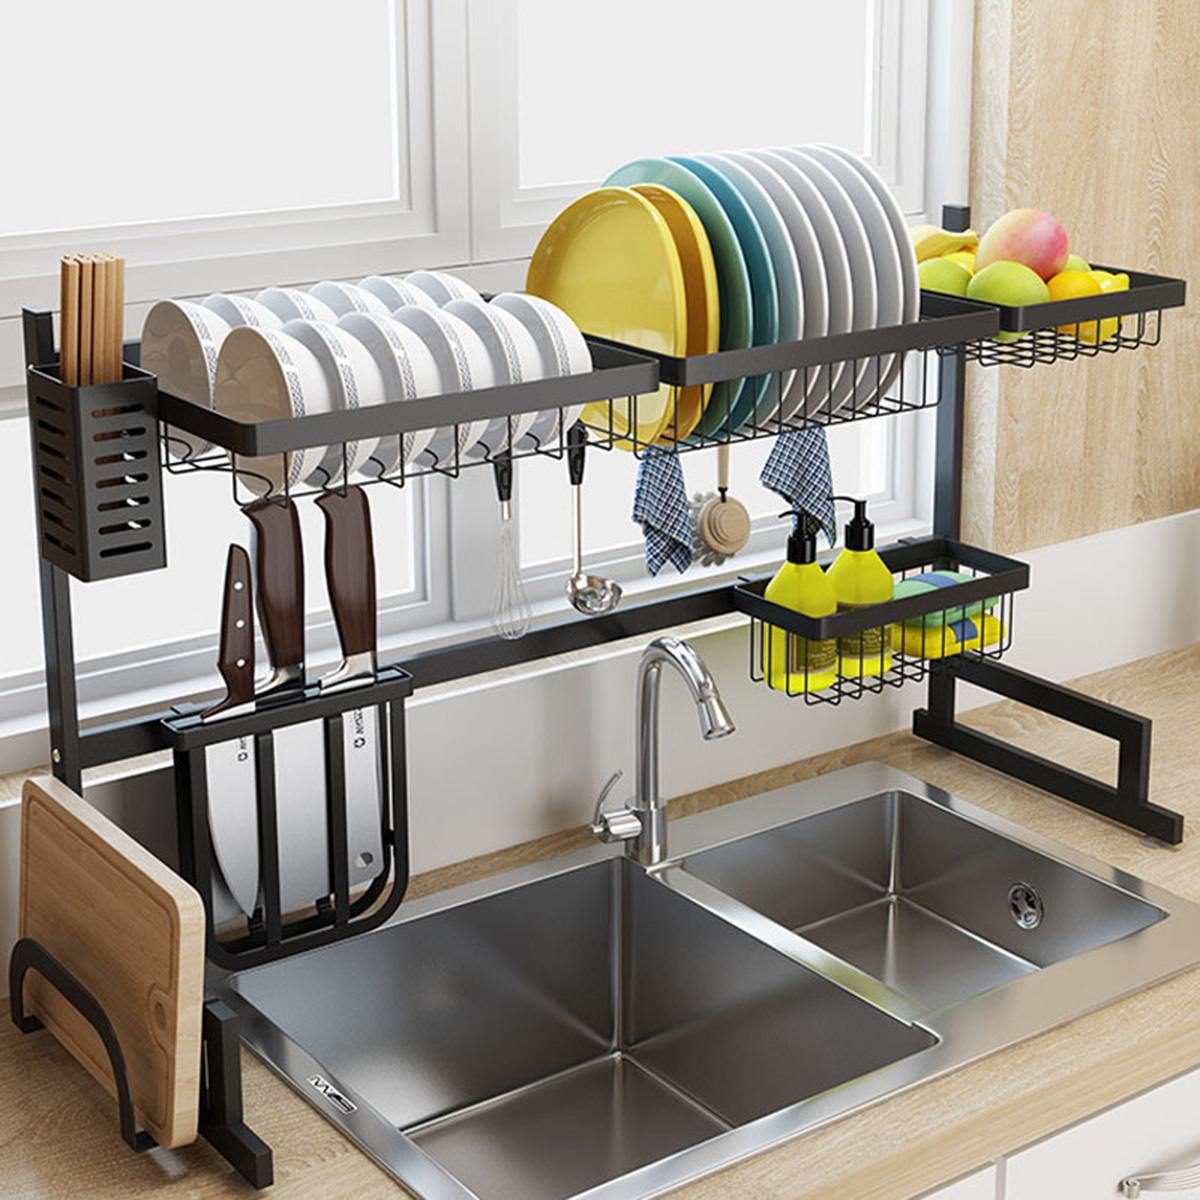 Stainless Steel sink Shelf Organizer - Style's Bug